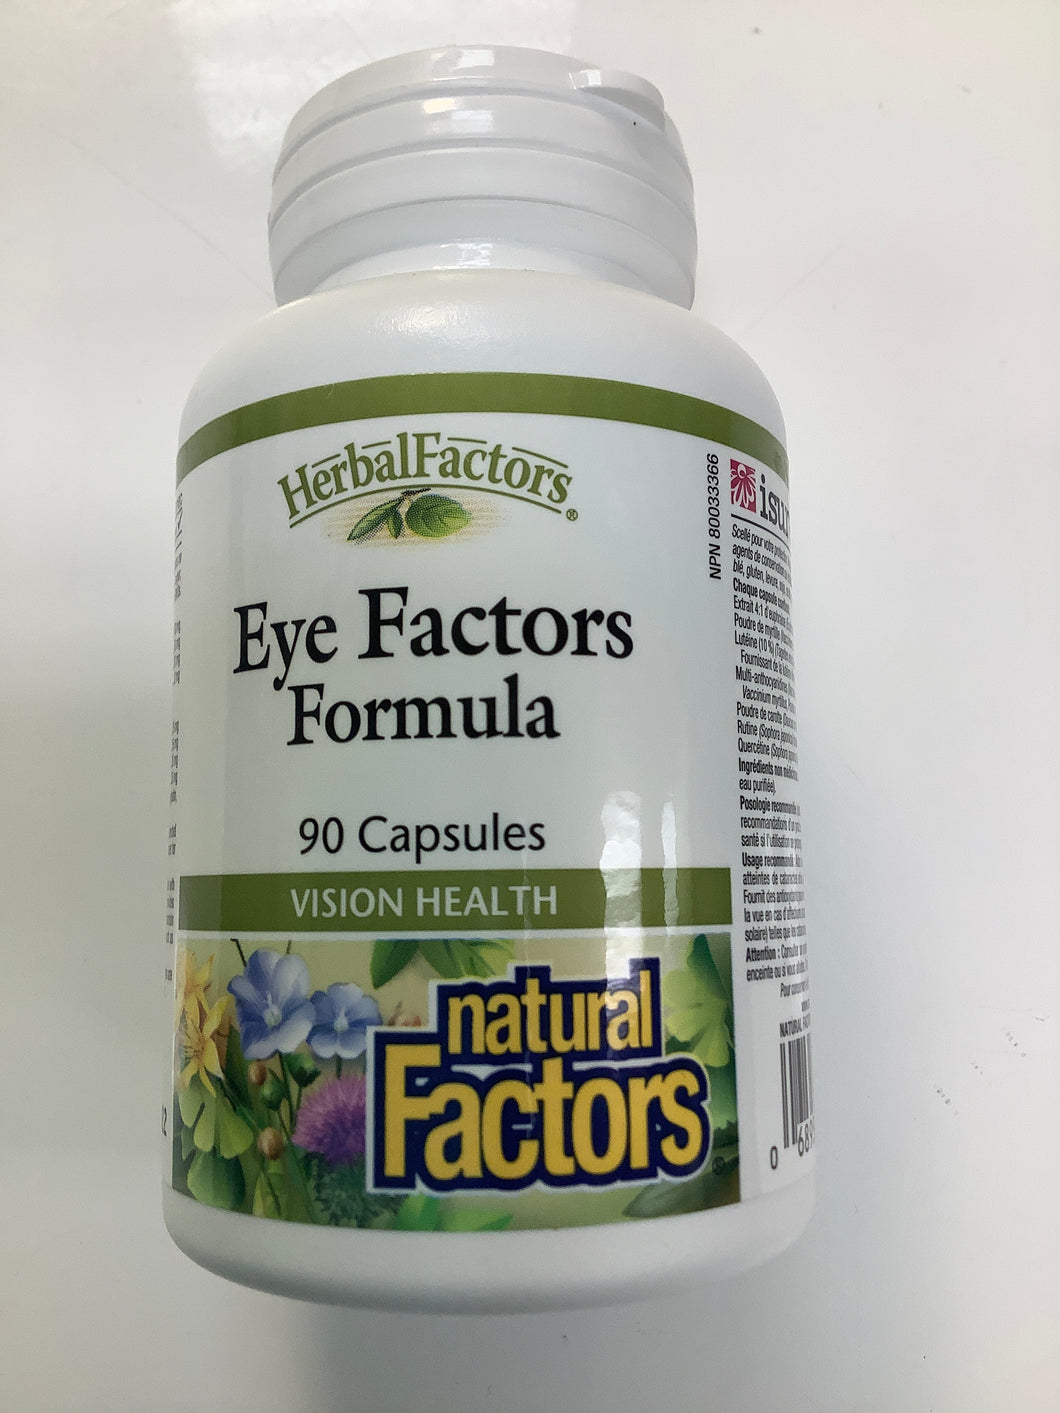 Natural Factors Herbal Factors Eye Factors Formula